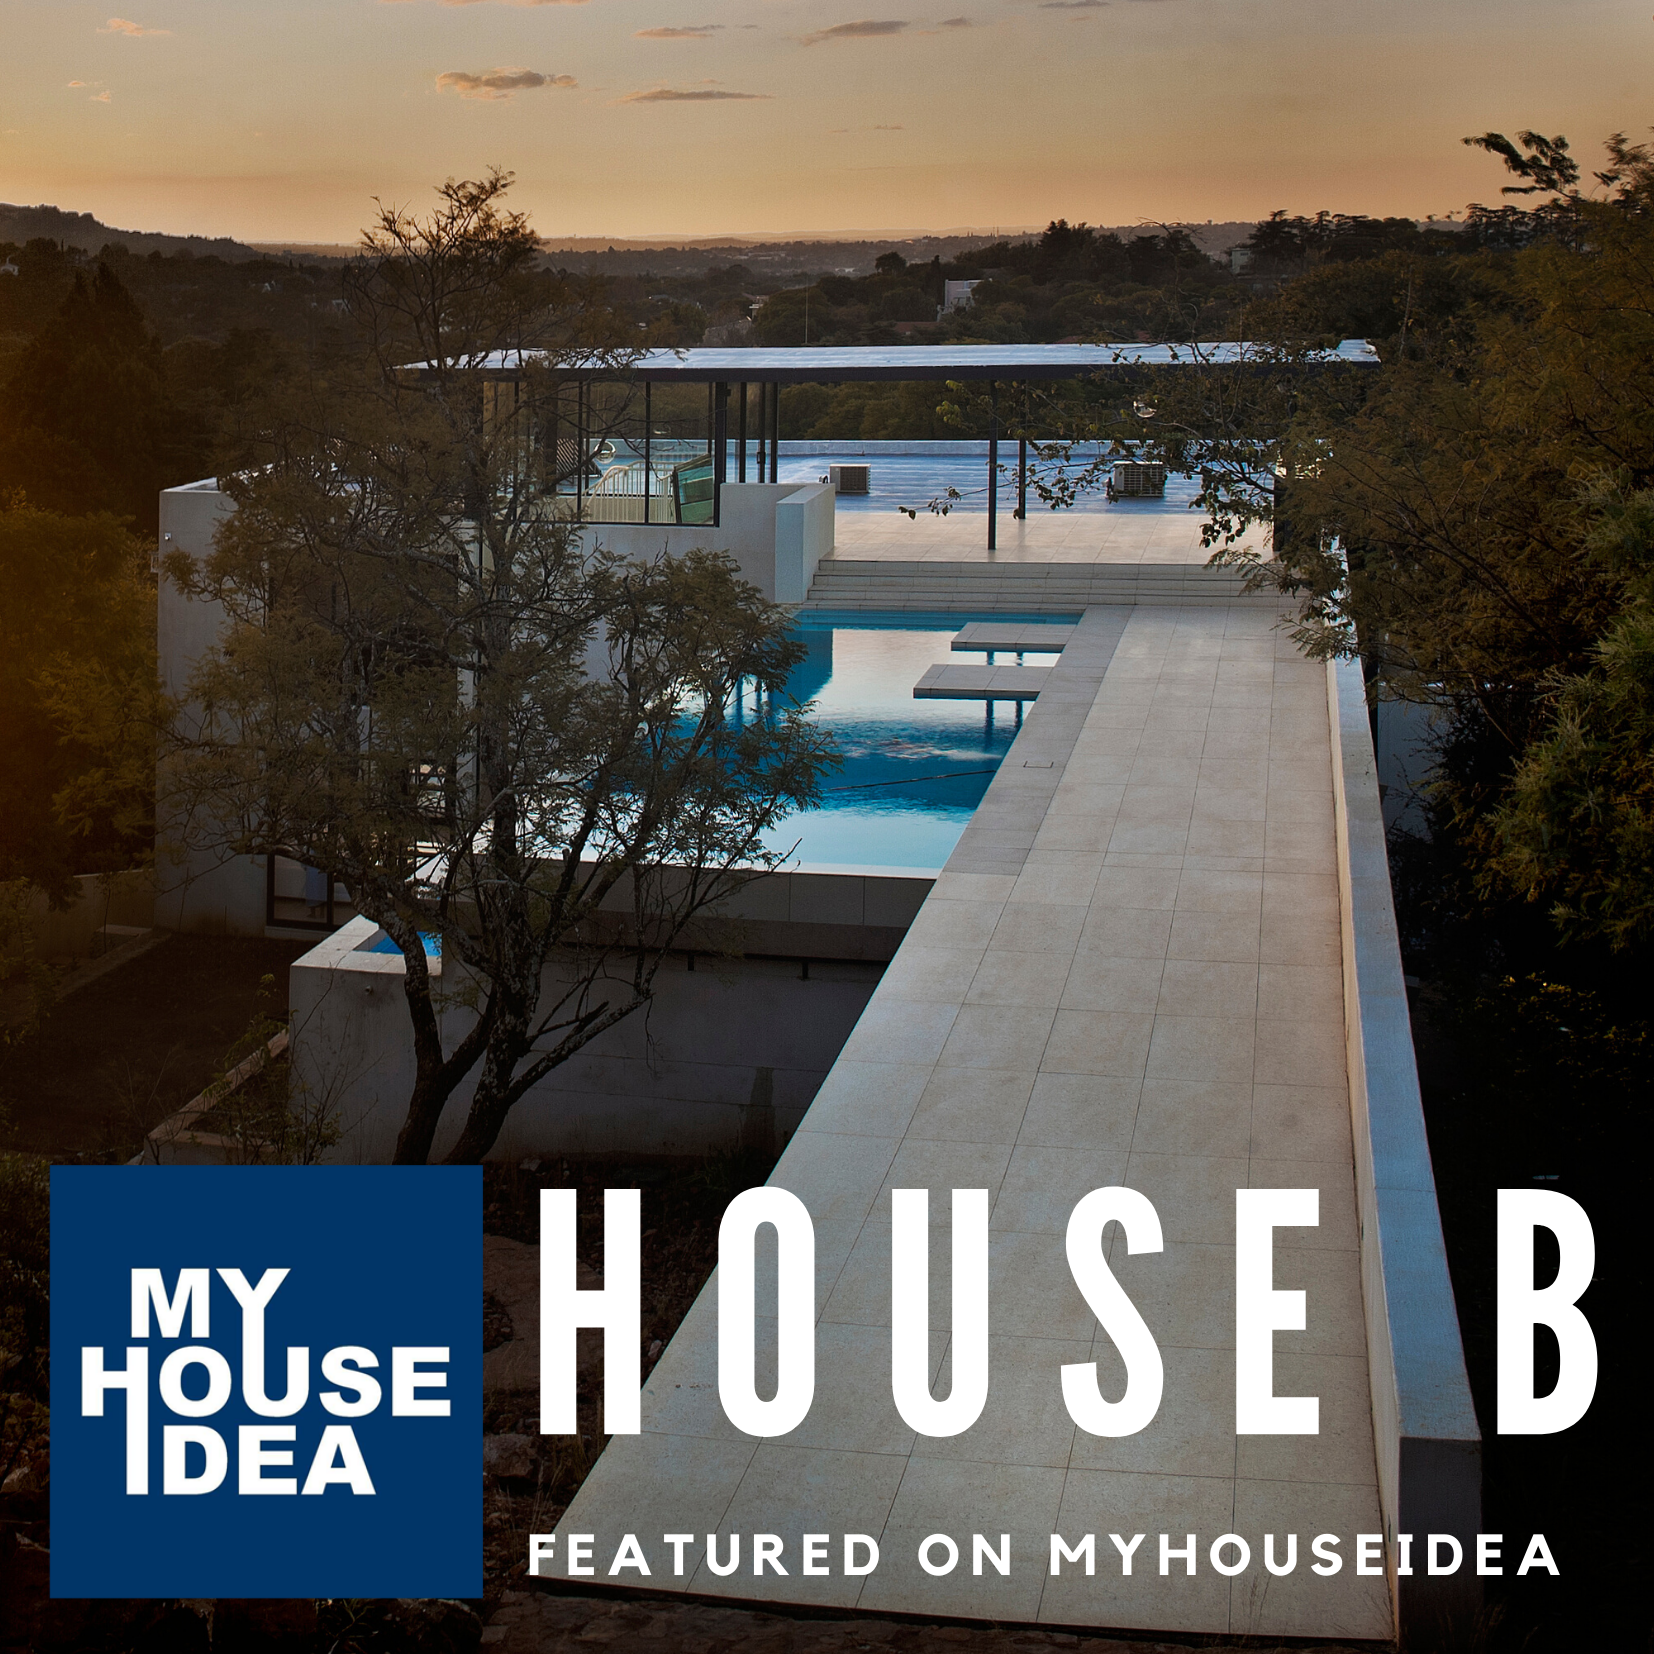 House B, featured on My House Idea